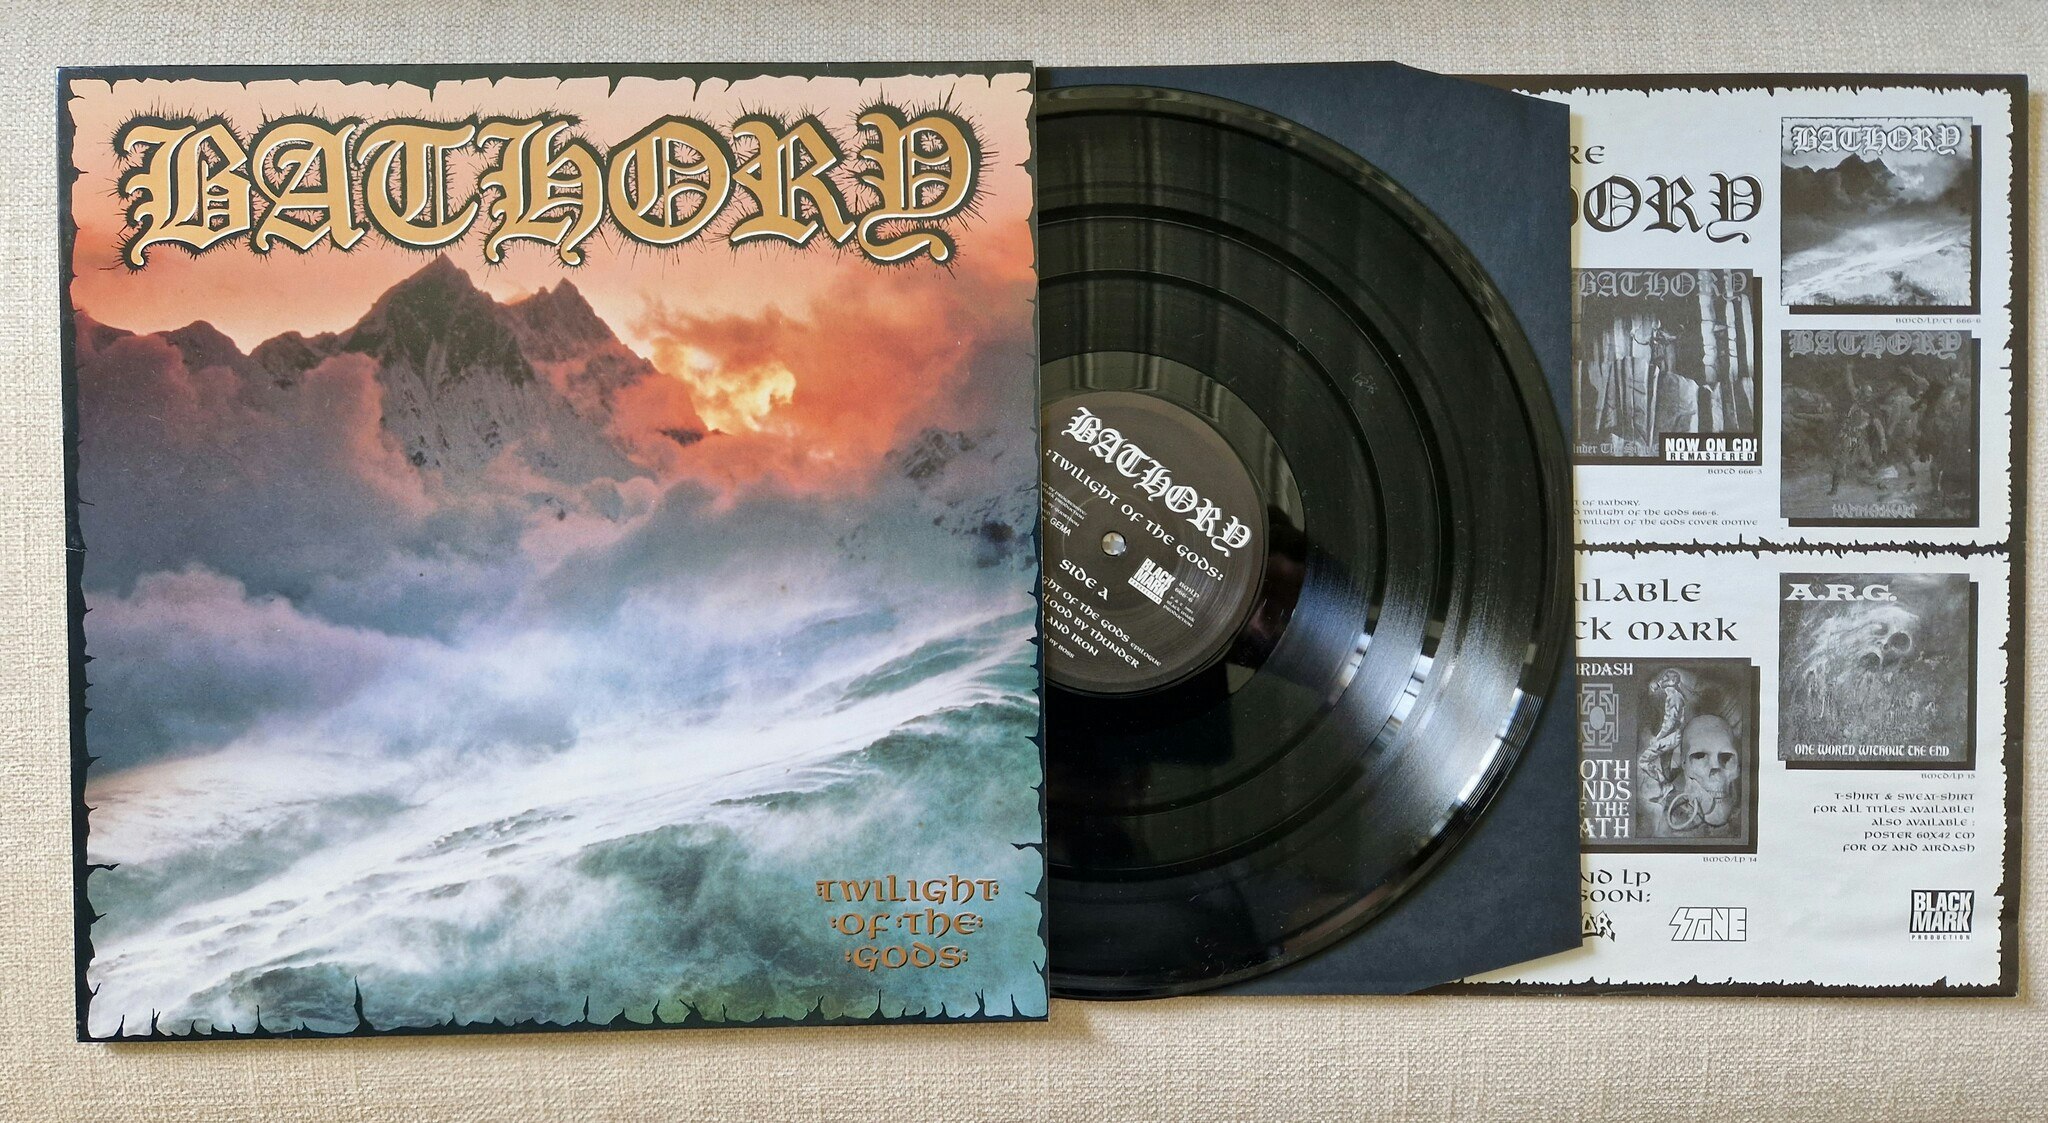 Bathory, Twilight of the gods. Vinyl LP